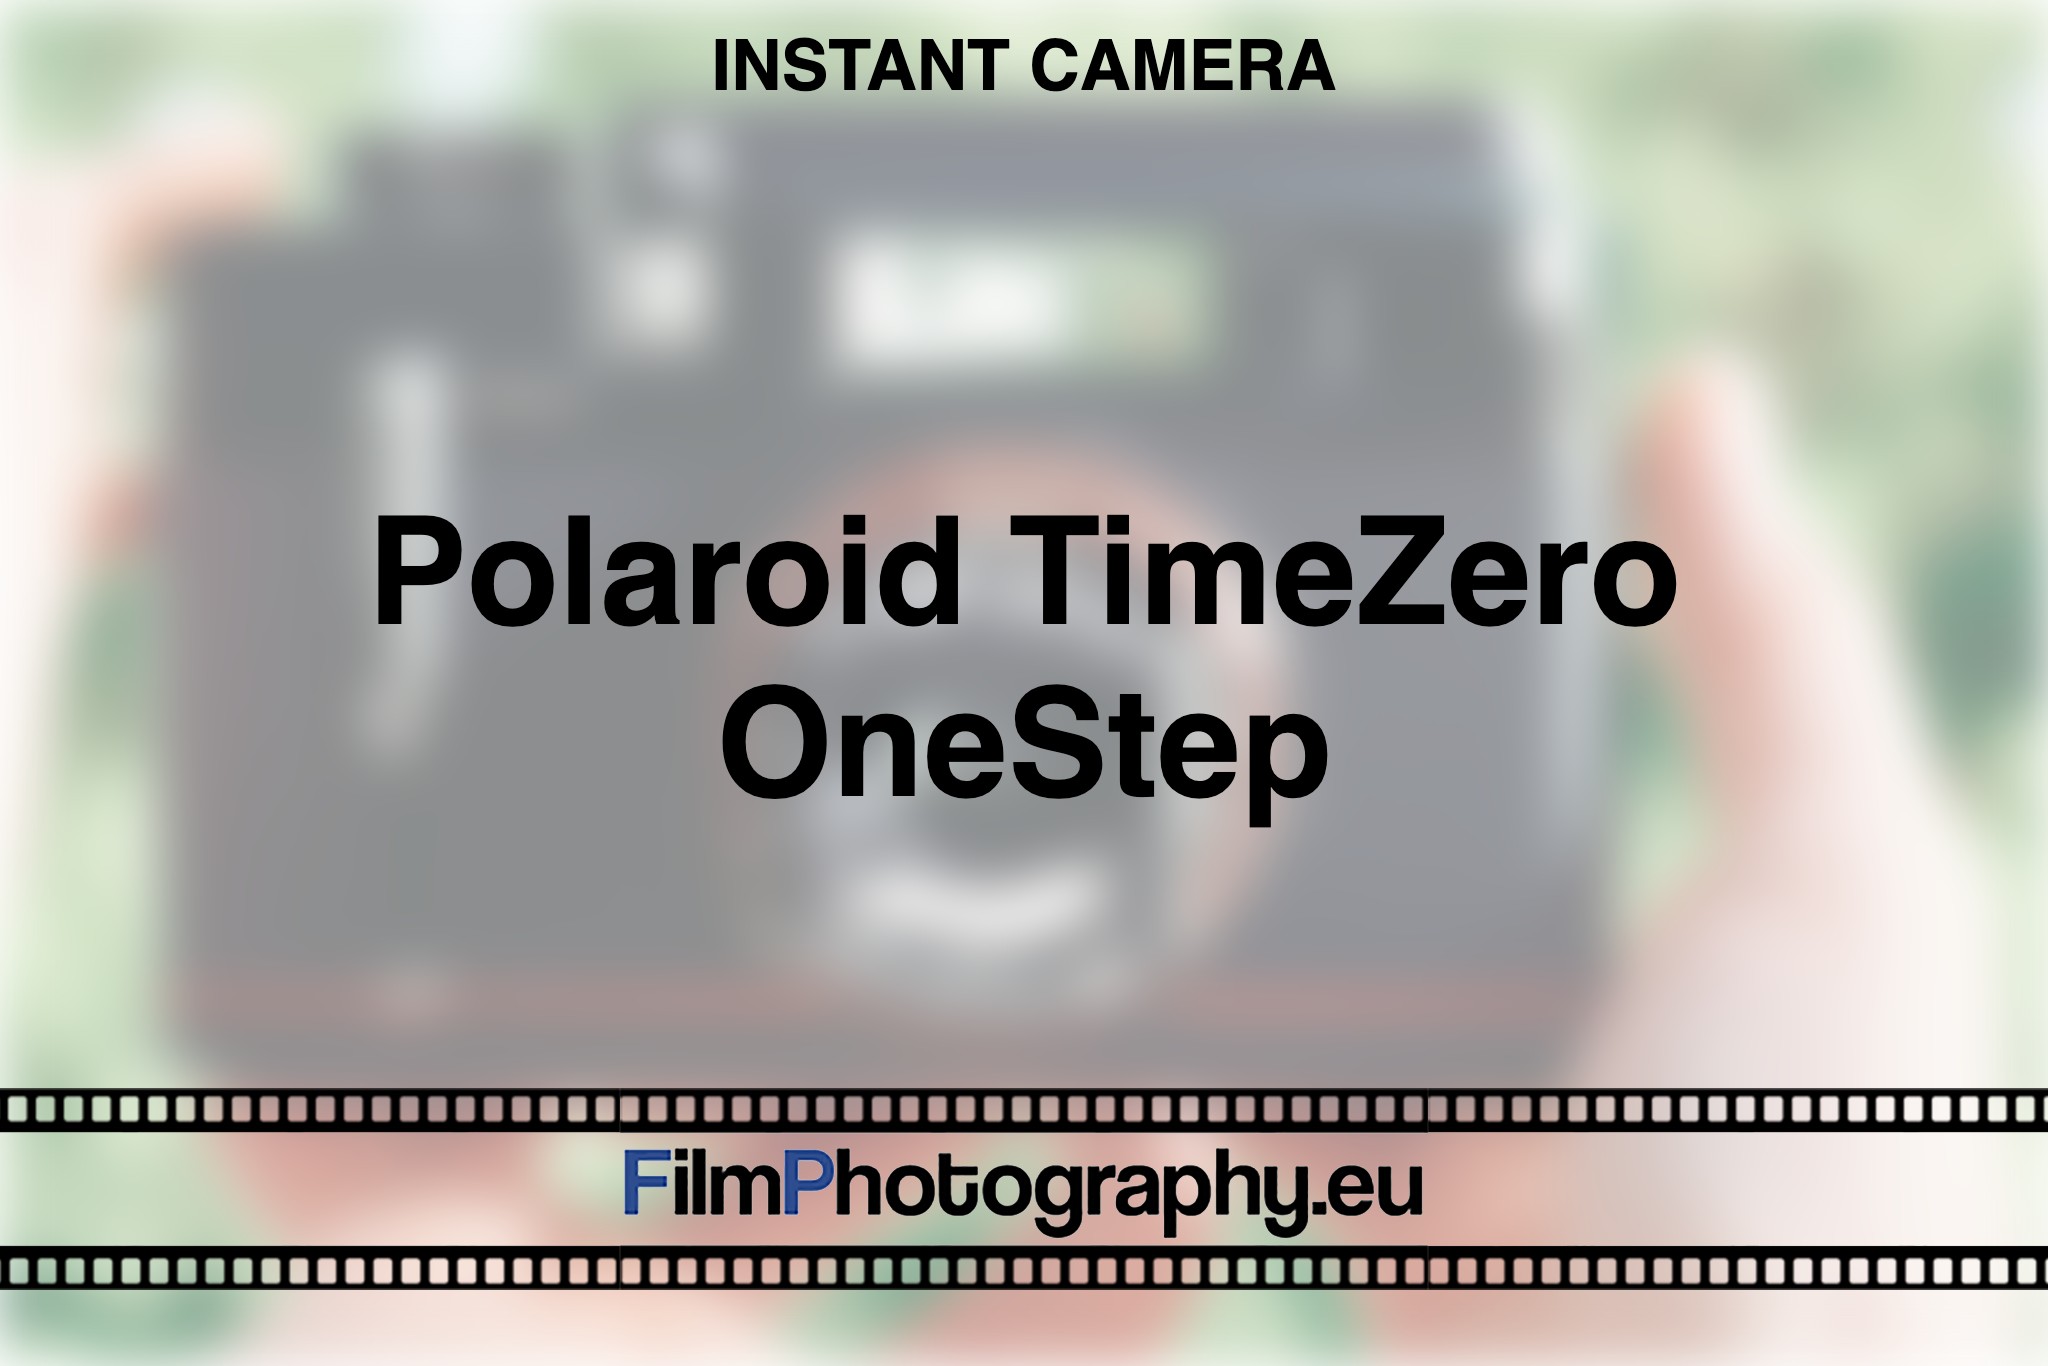 polaroid-timezero-onestep-instant-camera-bnv